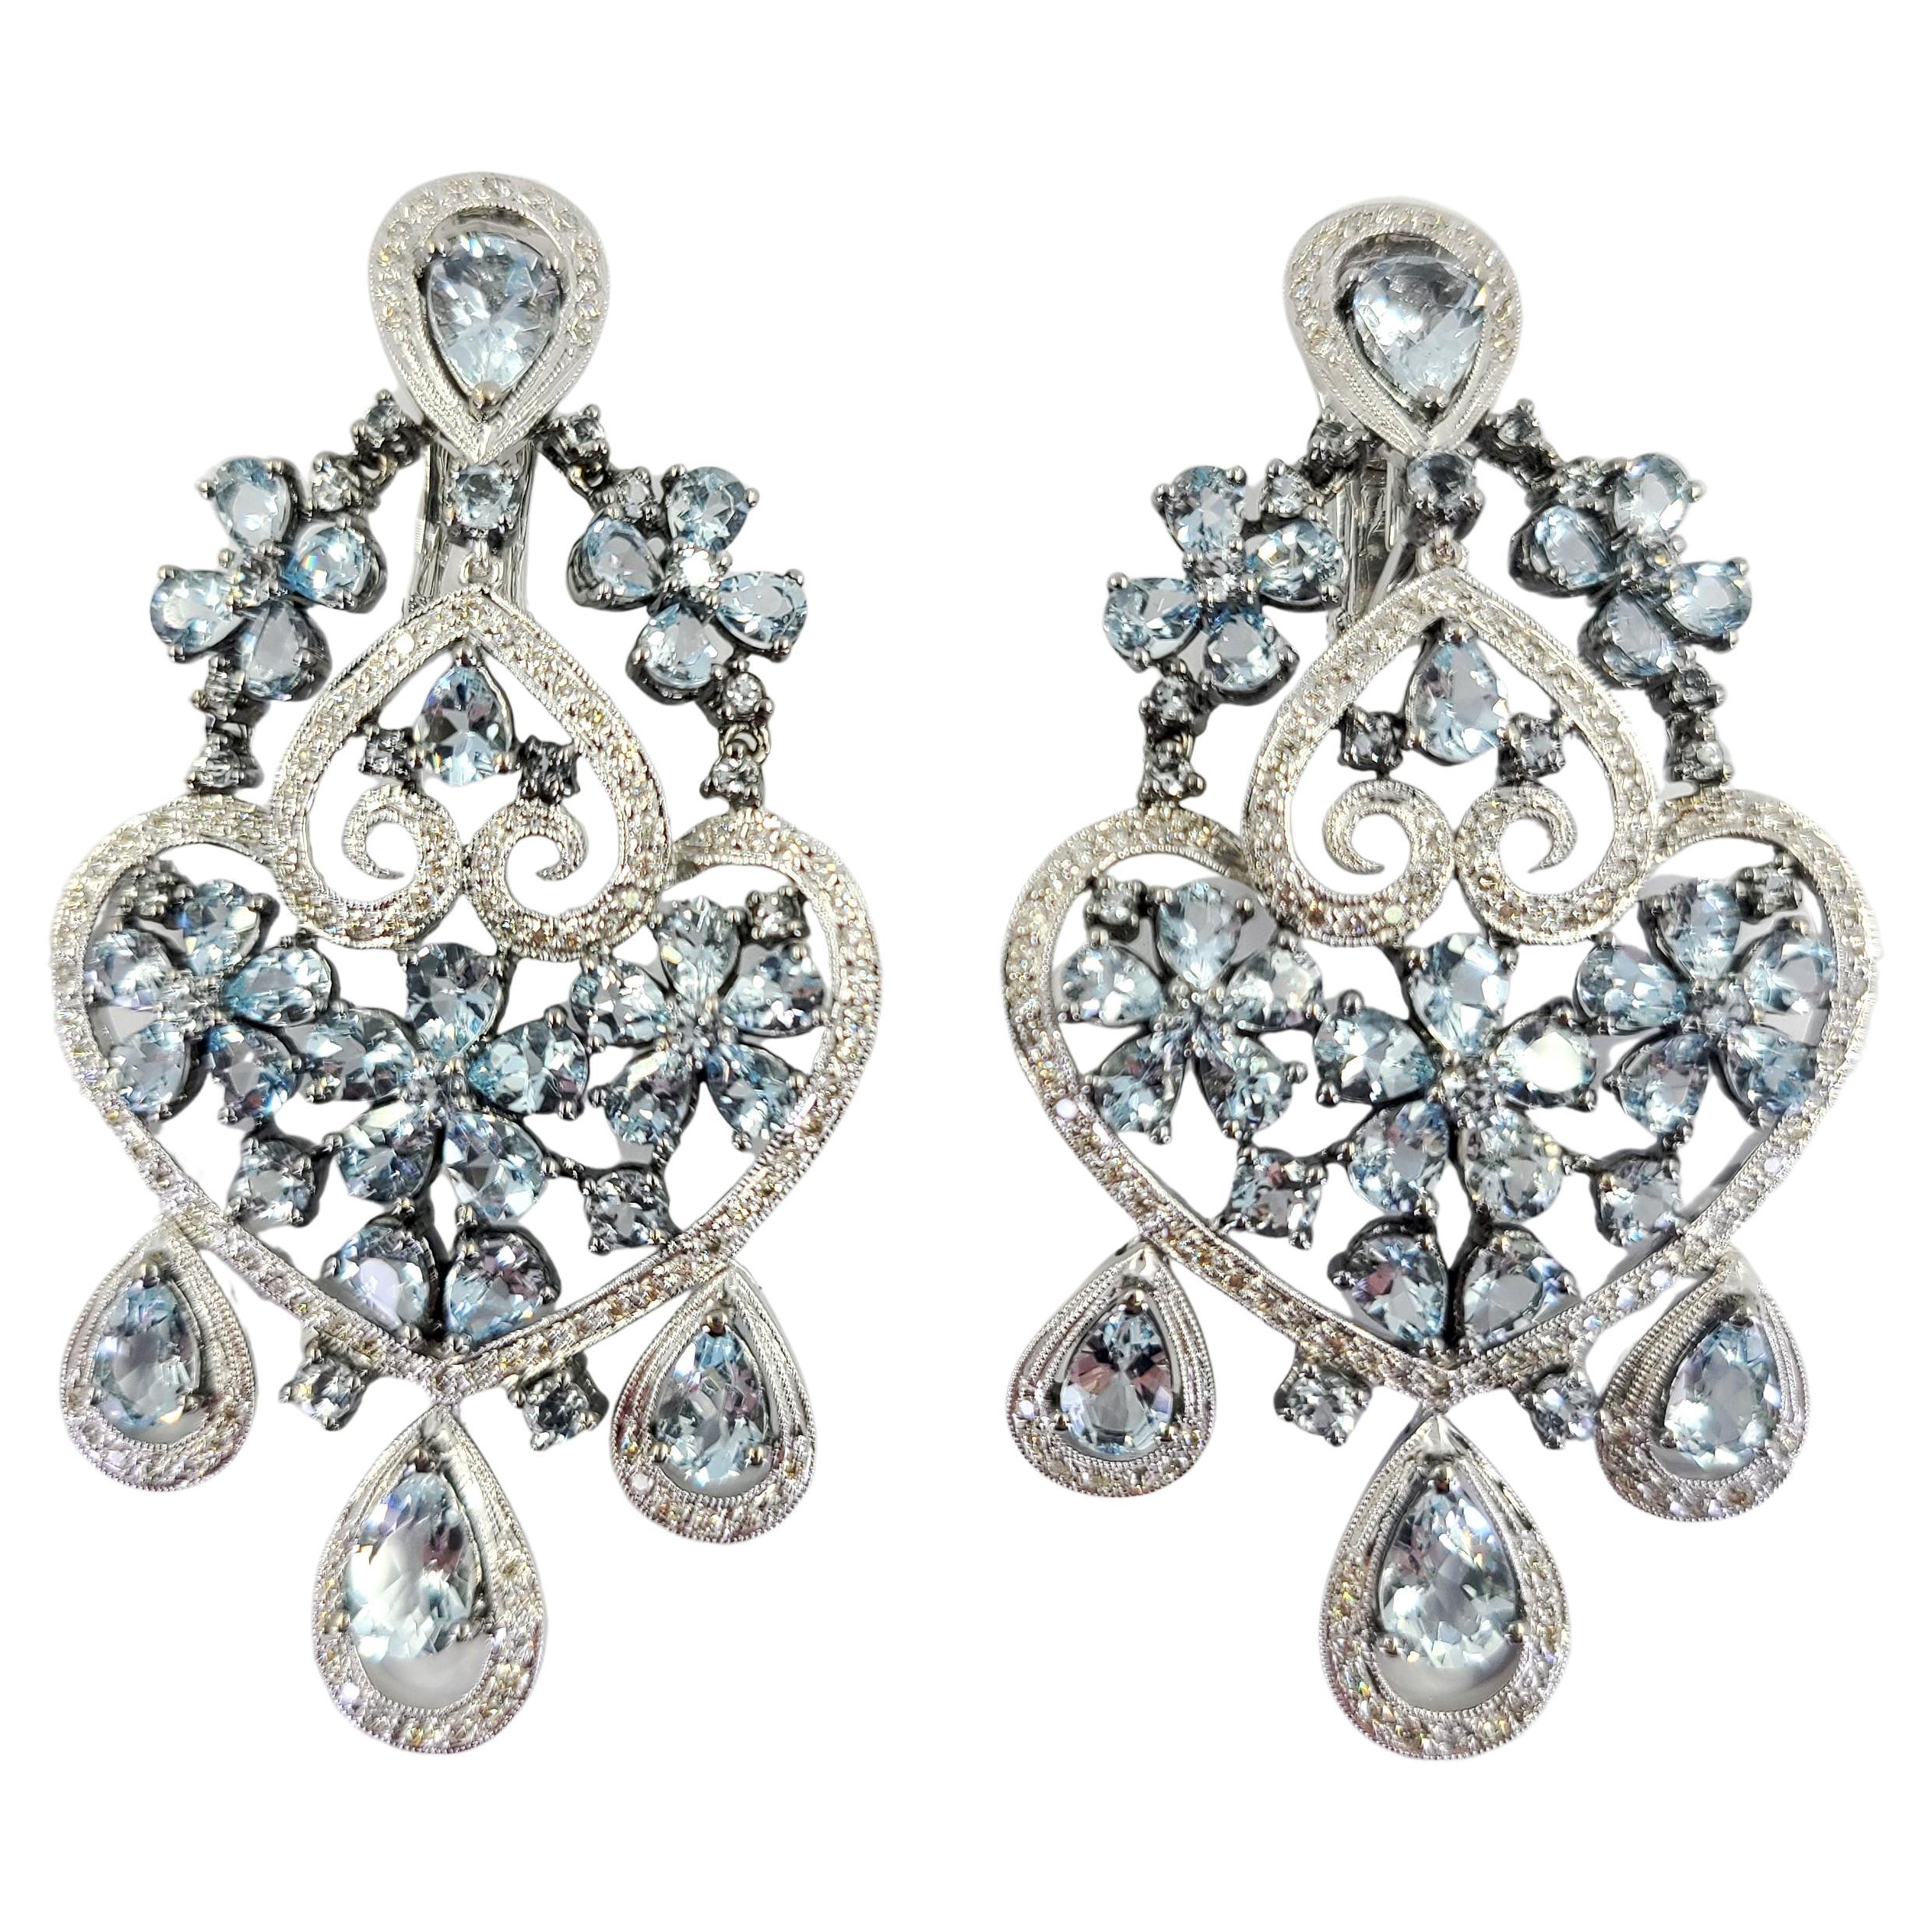 White Gold, Aquamarine, and Diamond Chandelier Earrings